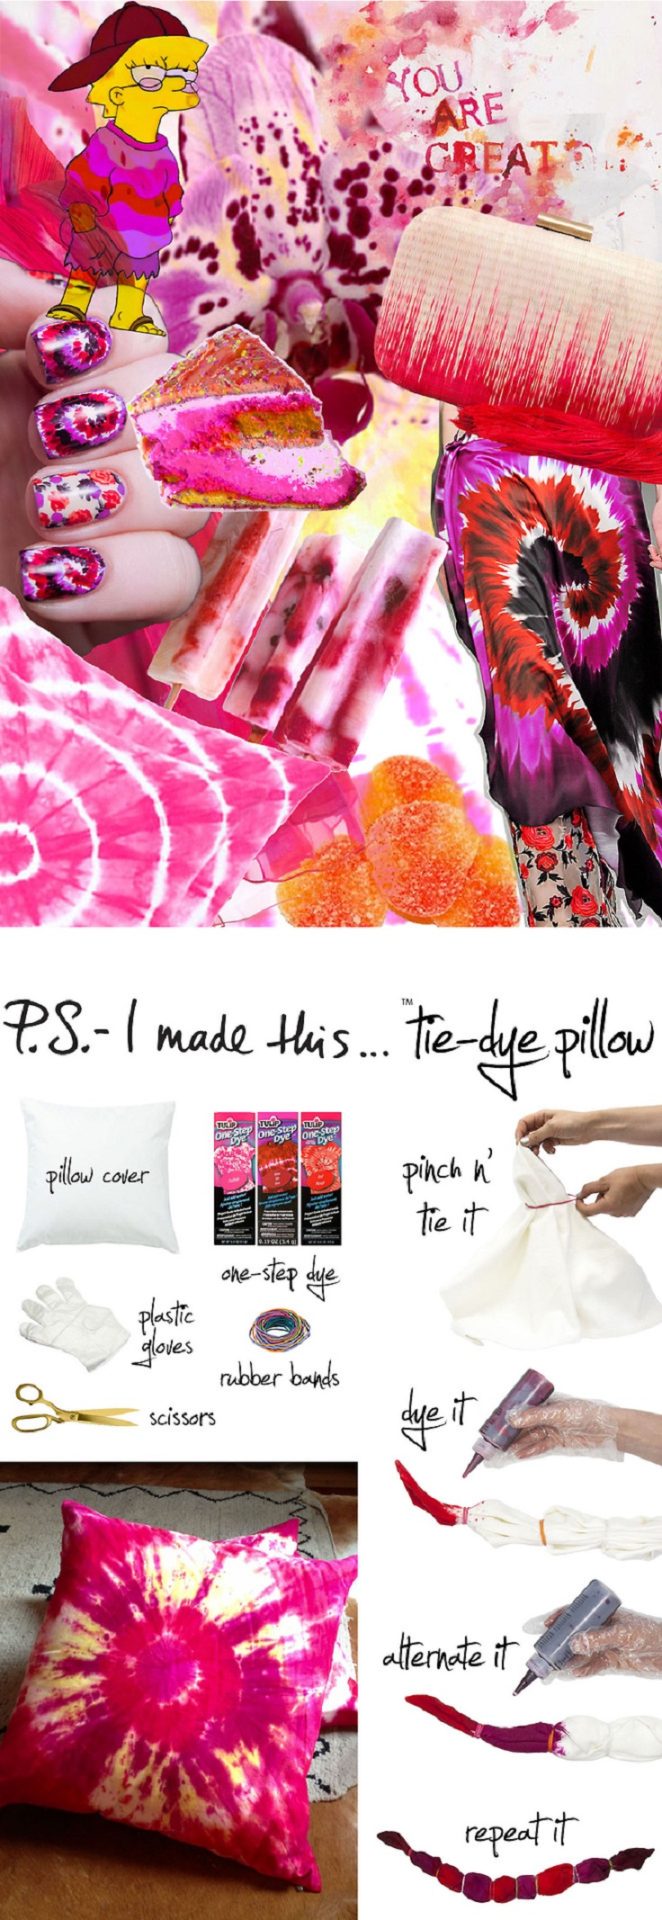 diy pillows covers handmade